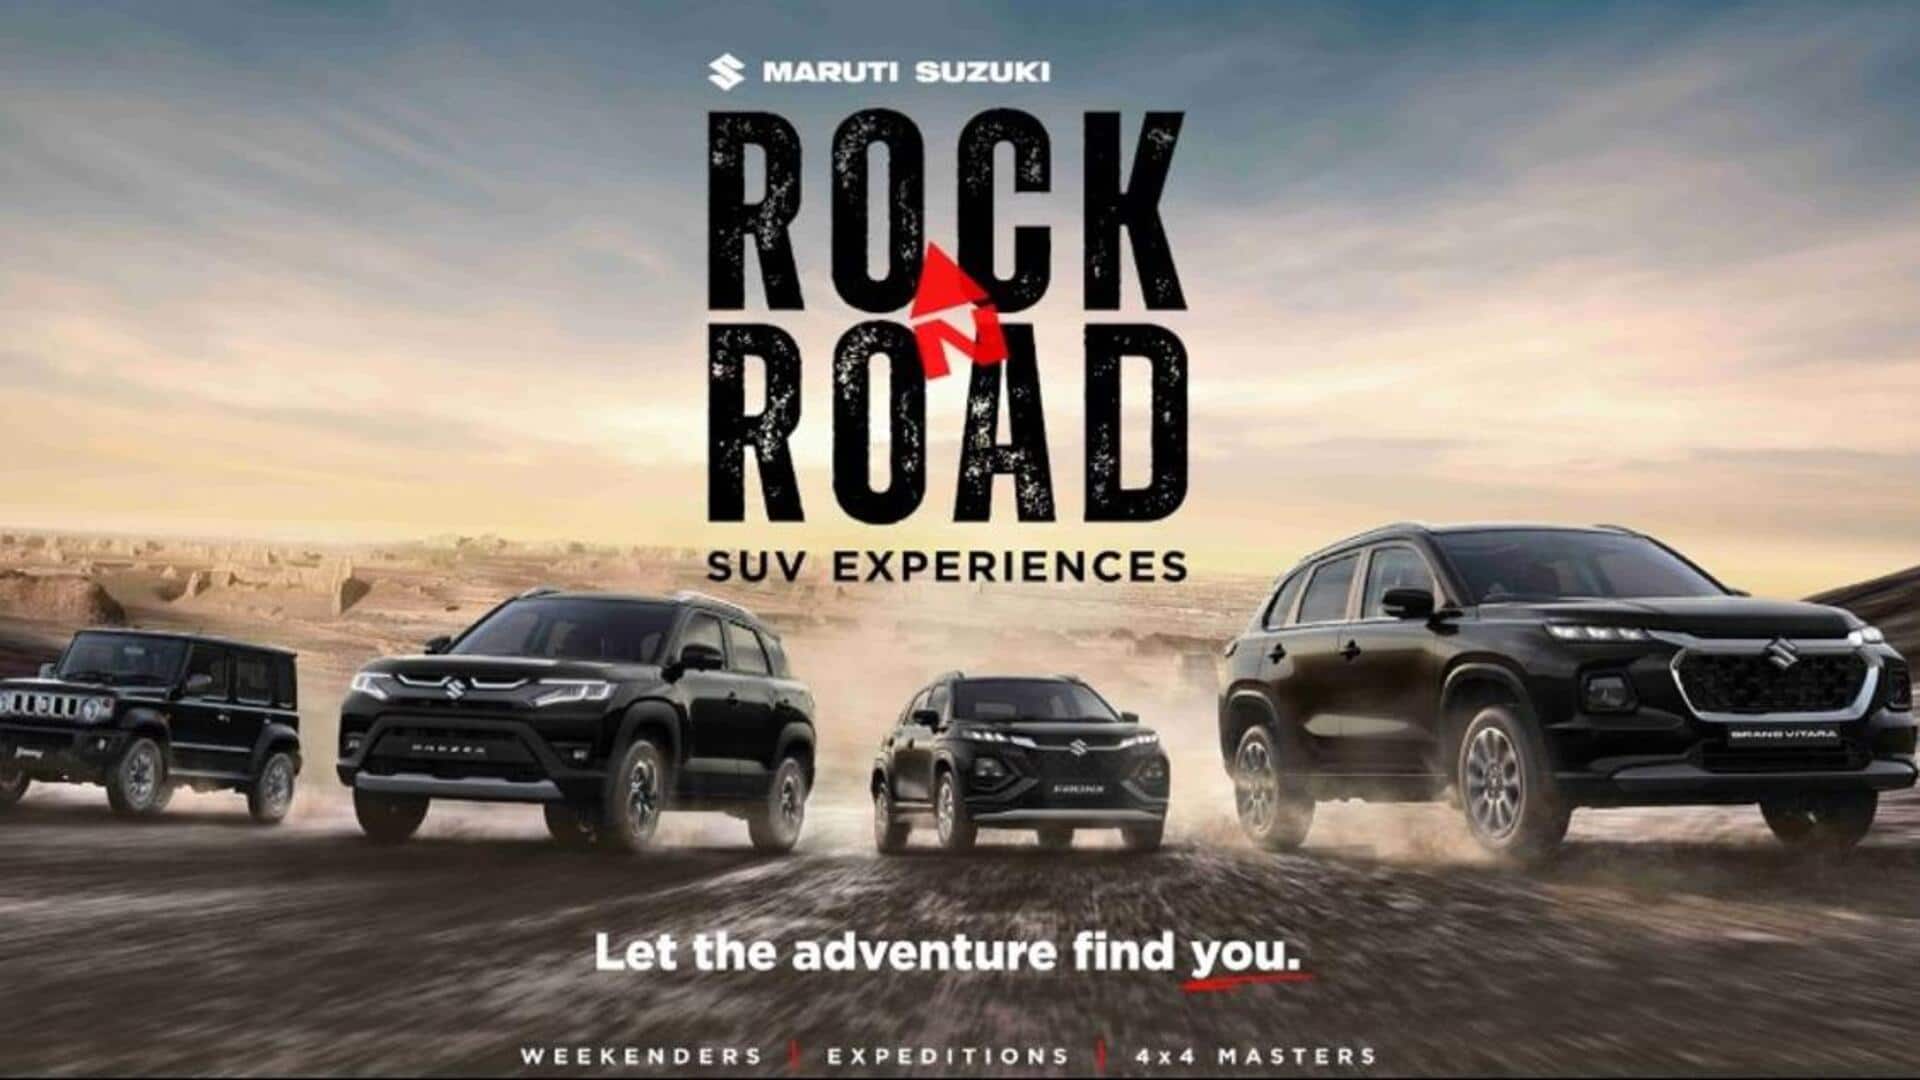 Maruti Suzuki's 'Rock N Road SUV Experiences' program explained